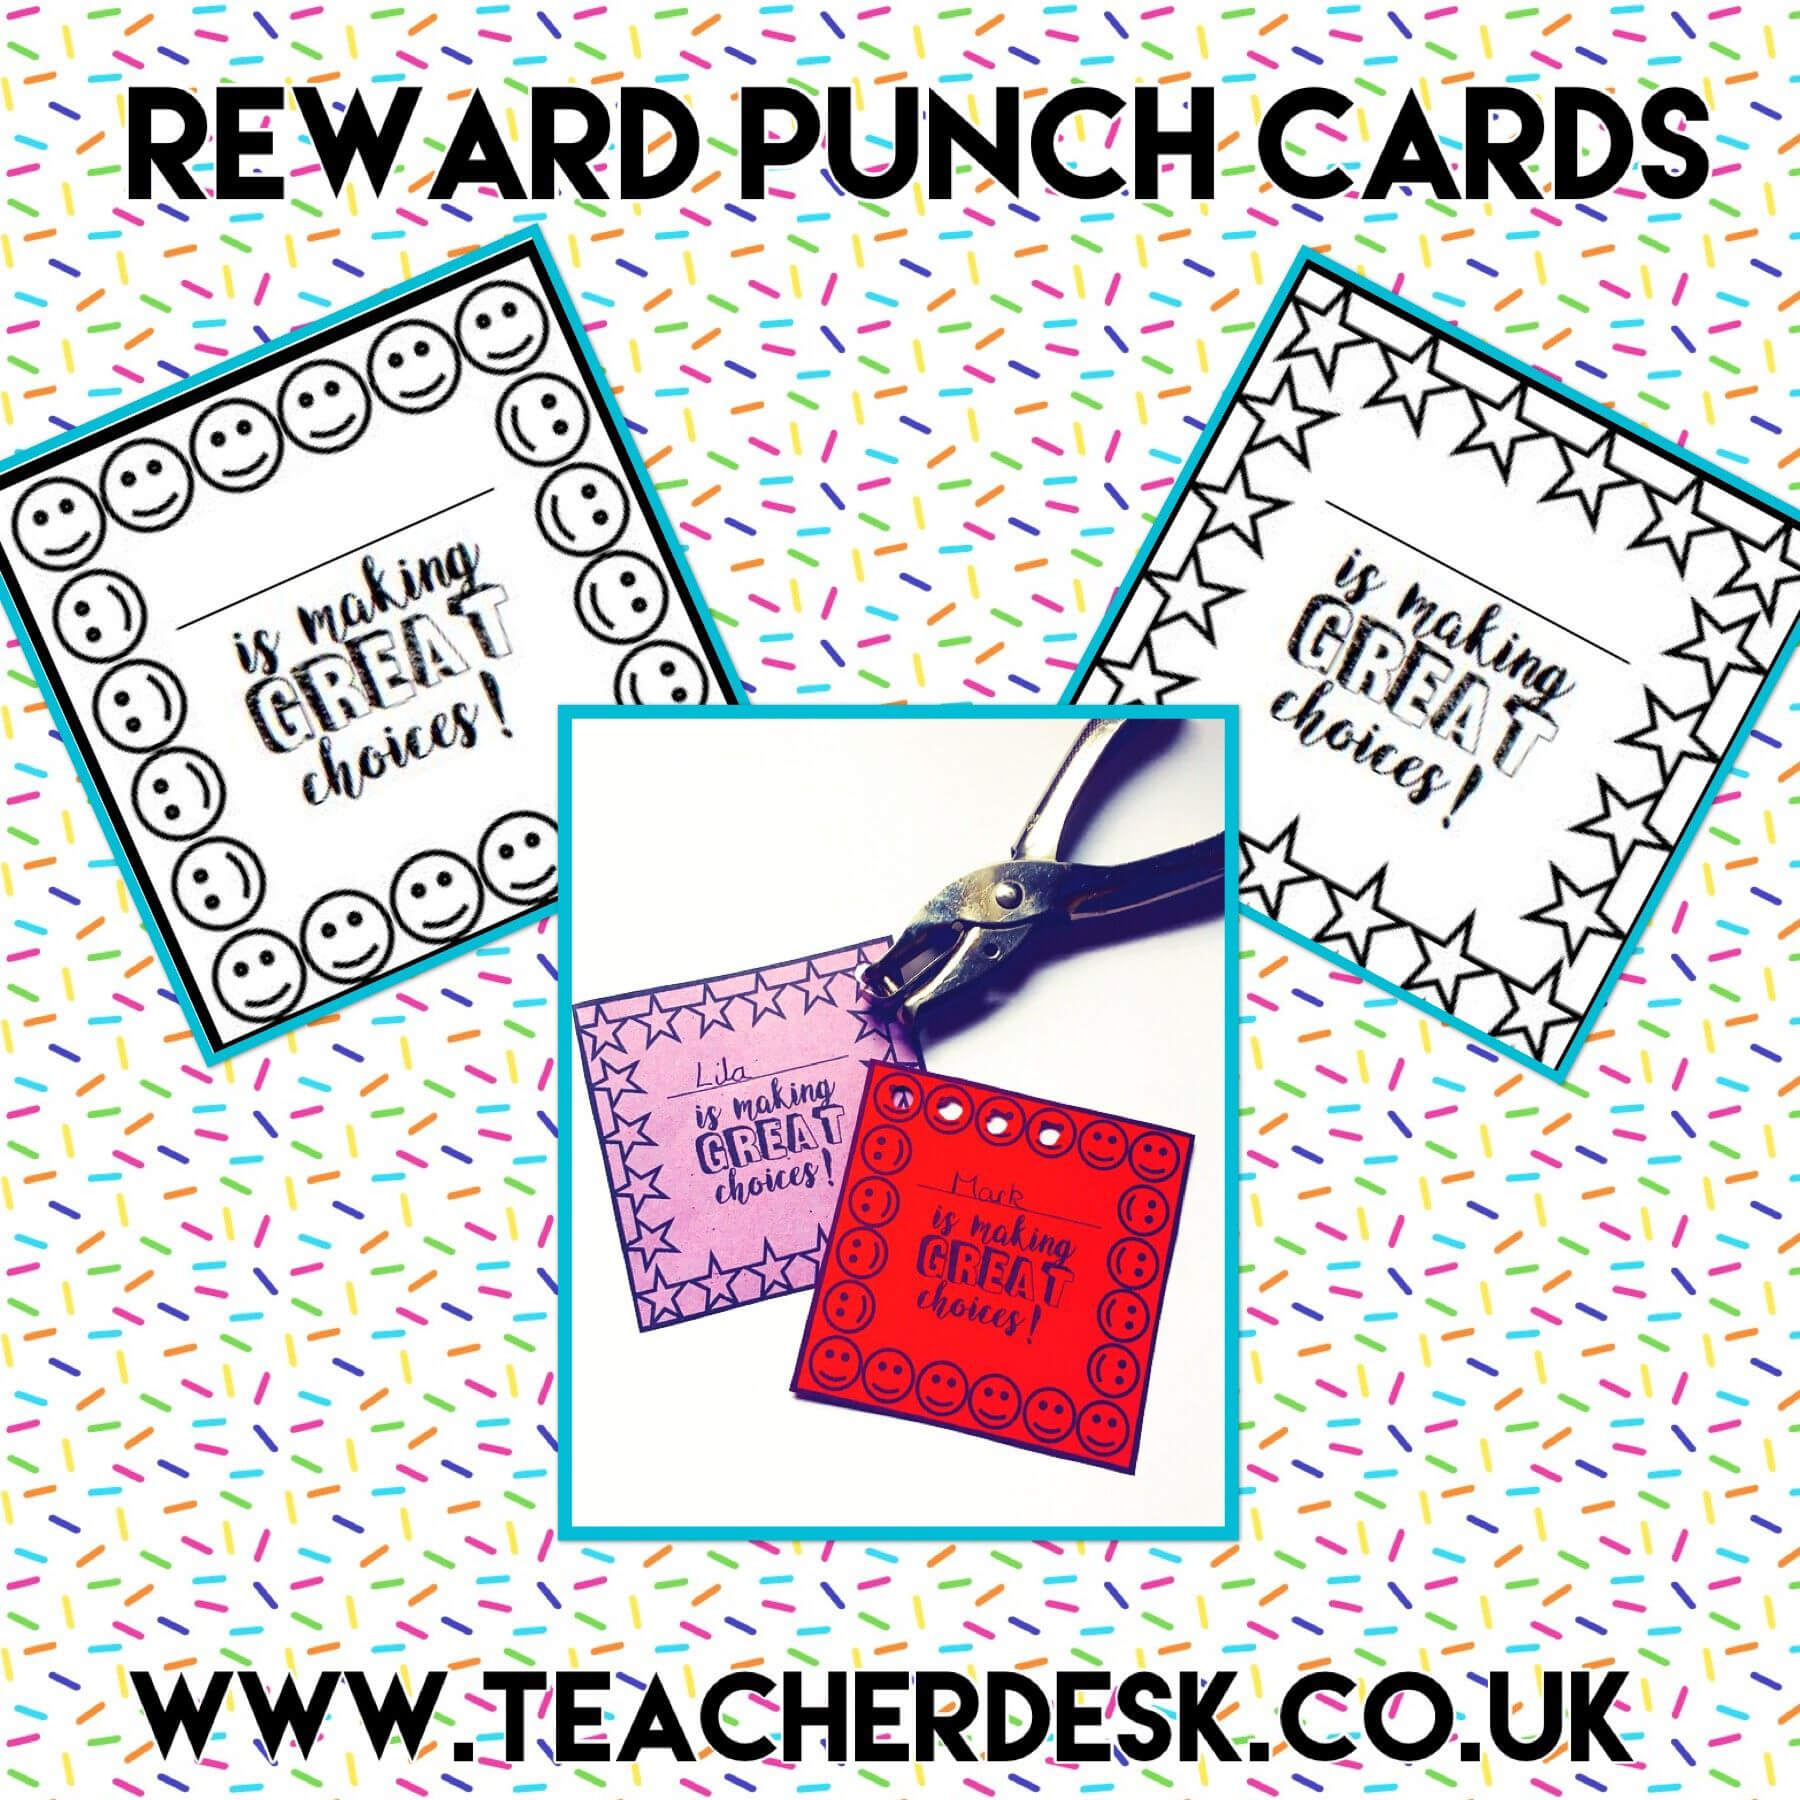 Reward Punch Cards Teacher Desk Www.teacherdesk.co.uk within Reward ...